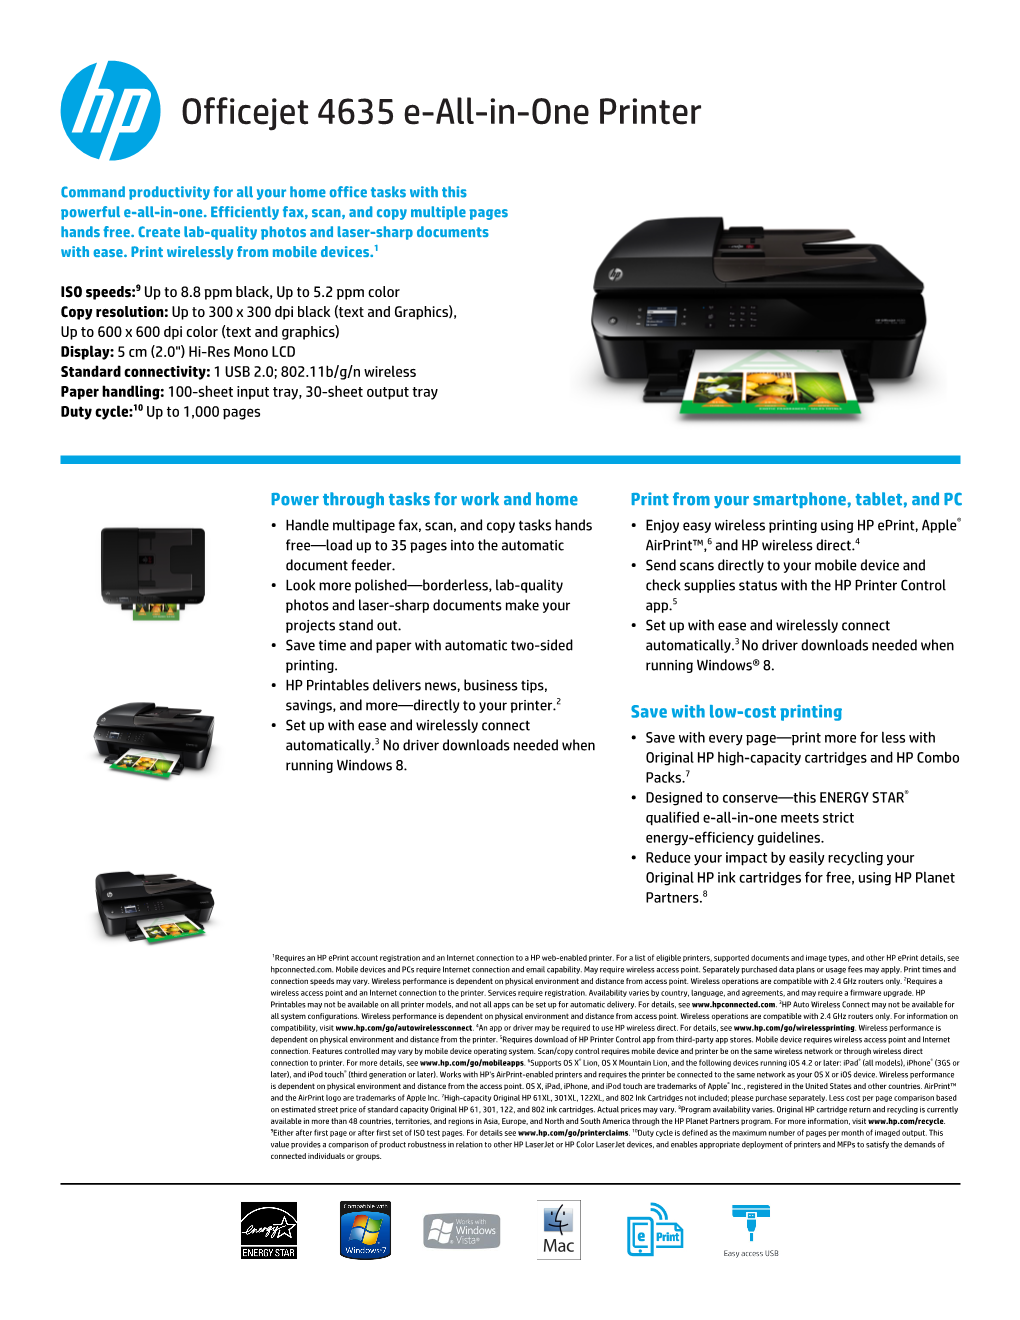 Officejet 4635 E-All-In-One Printer